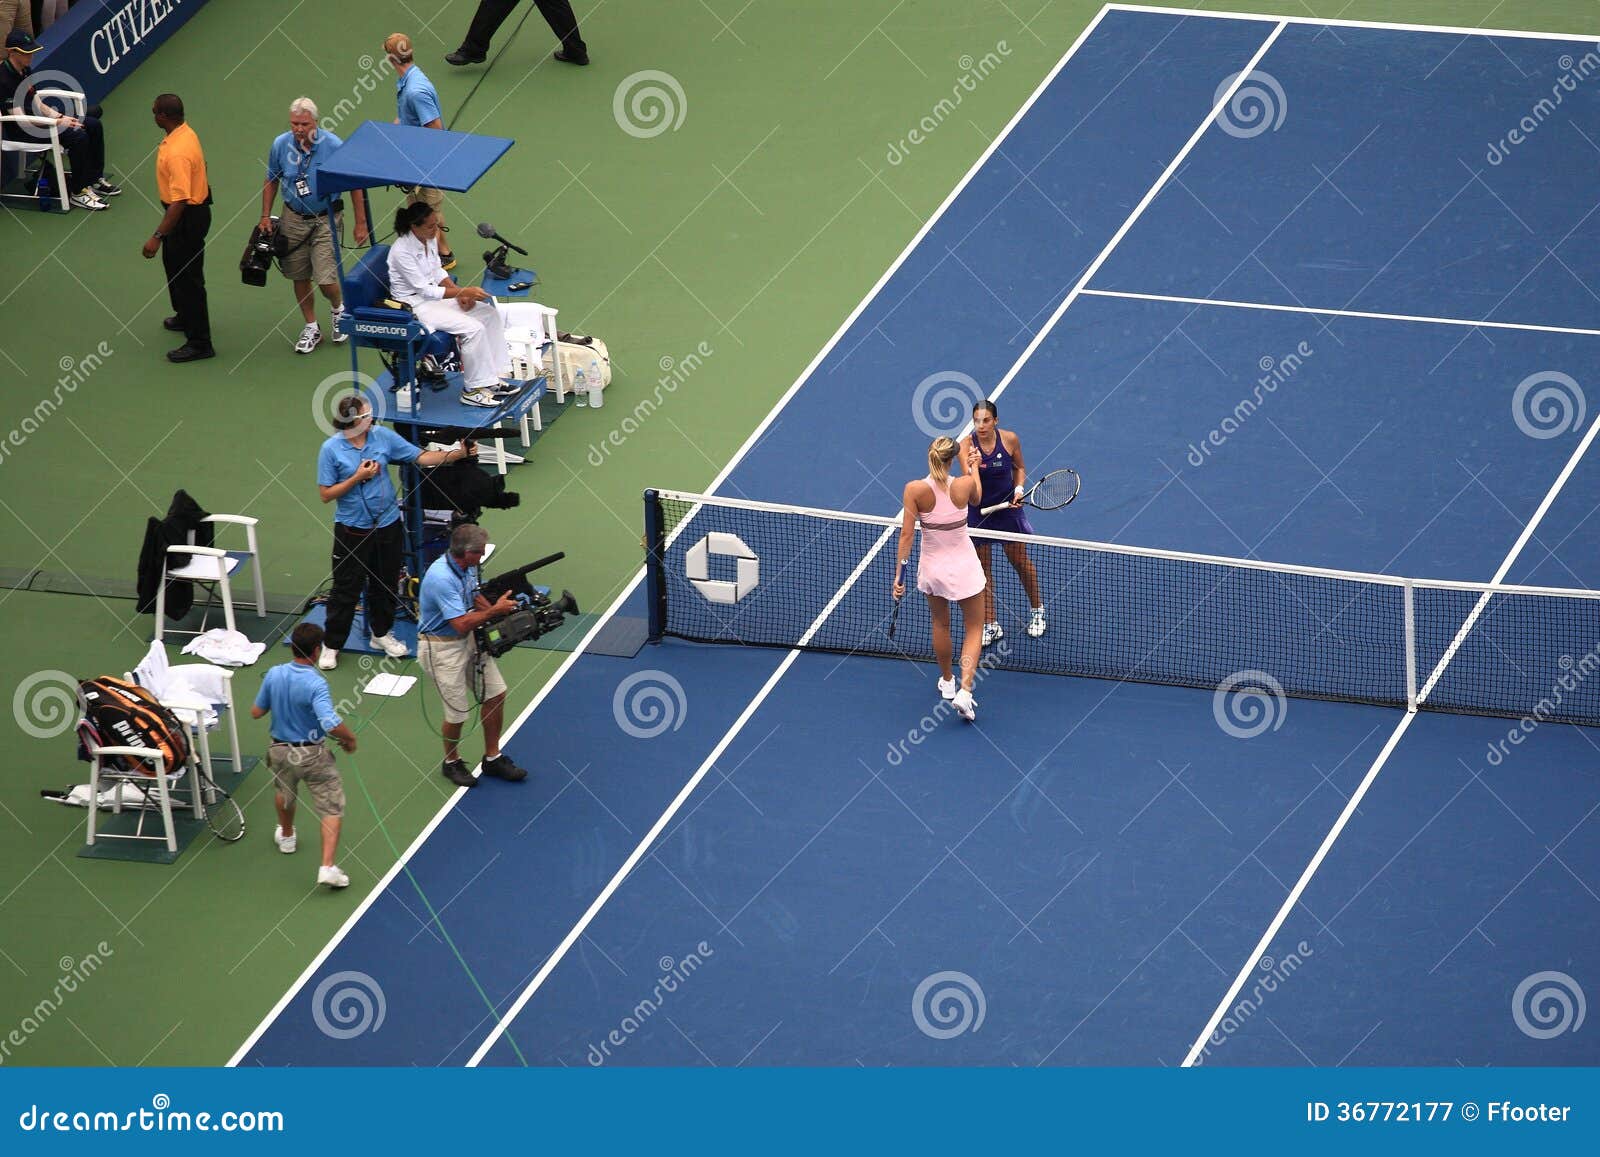 U. S. Open Tennis - Maria Sharapova. Maria Sharapova of Russia wins a match against Marion Bartoli at Arthur Ashe Stadium at the US Open Tennis Championship in New York in 2012.